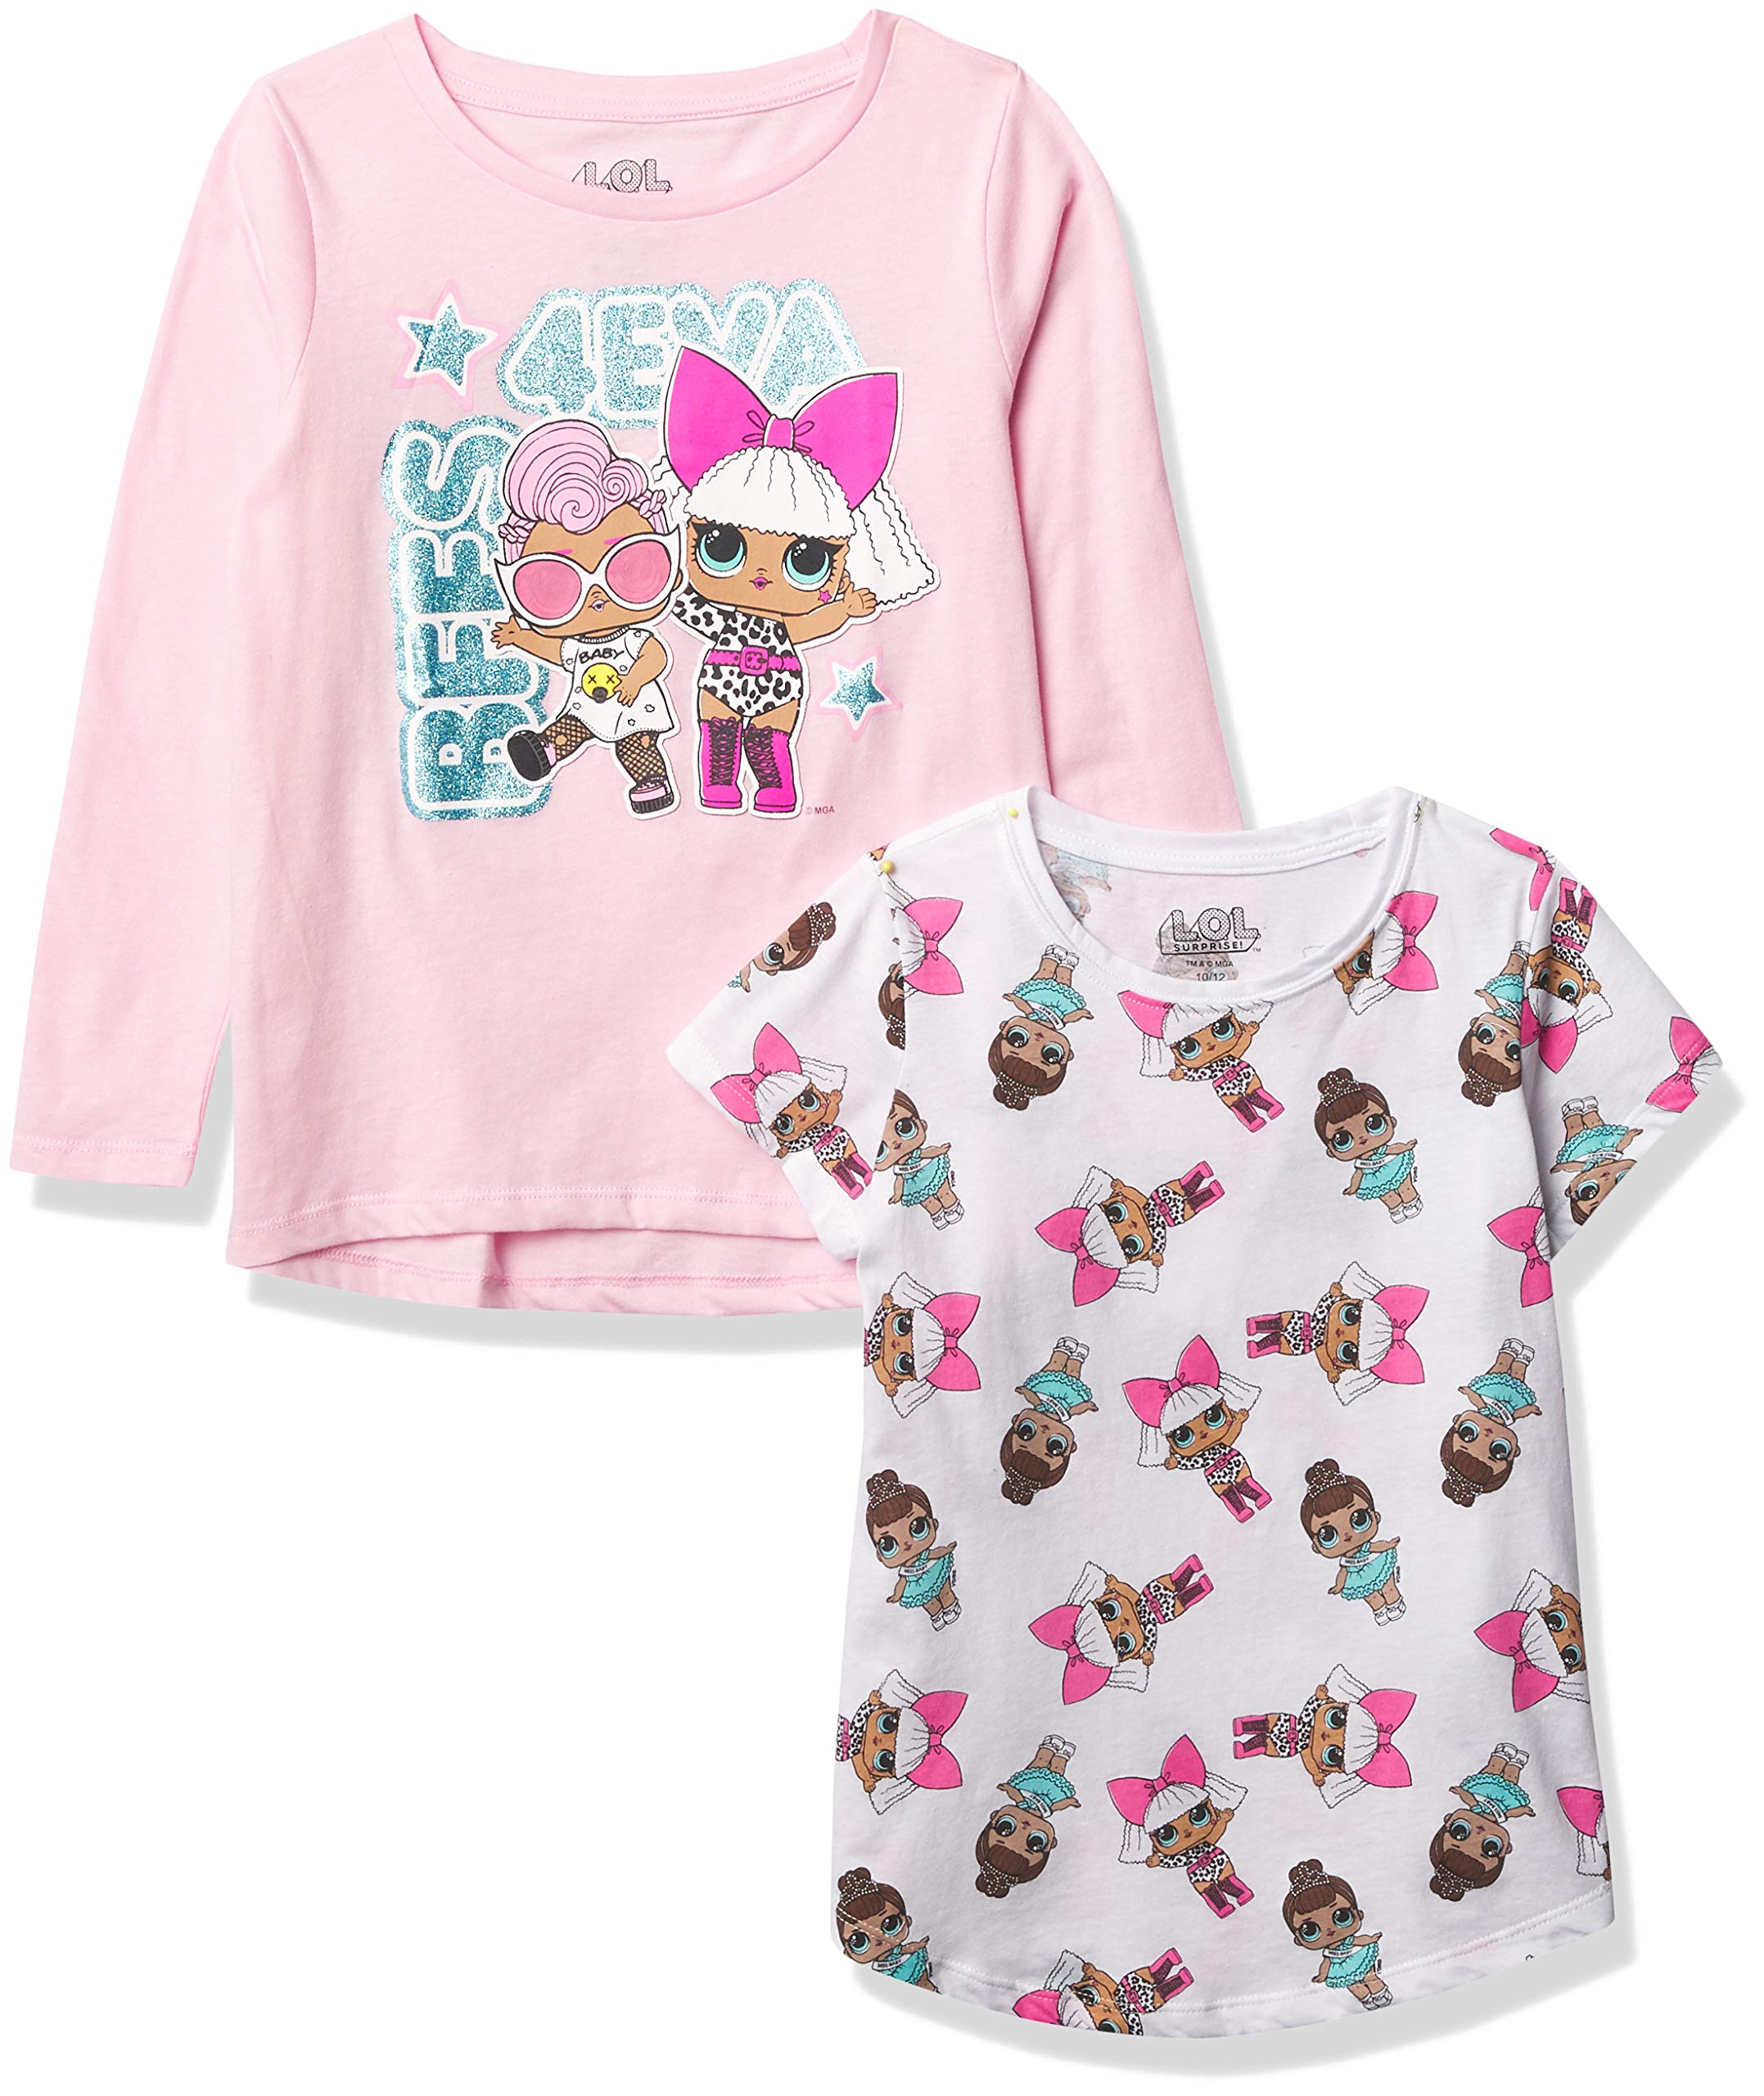 L.O.L. Surprise! girls 2-piece Short Sleeve Tee & Long Sleeve T-shirt Bundle Set - Girls Sizes 4-16